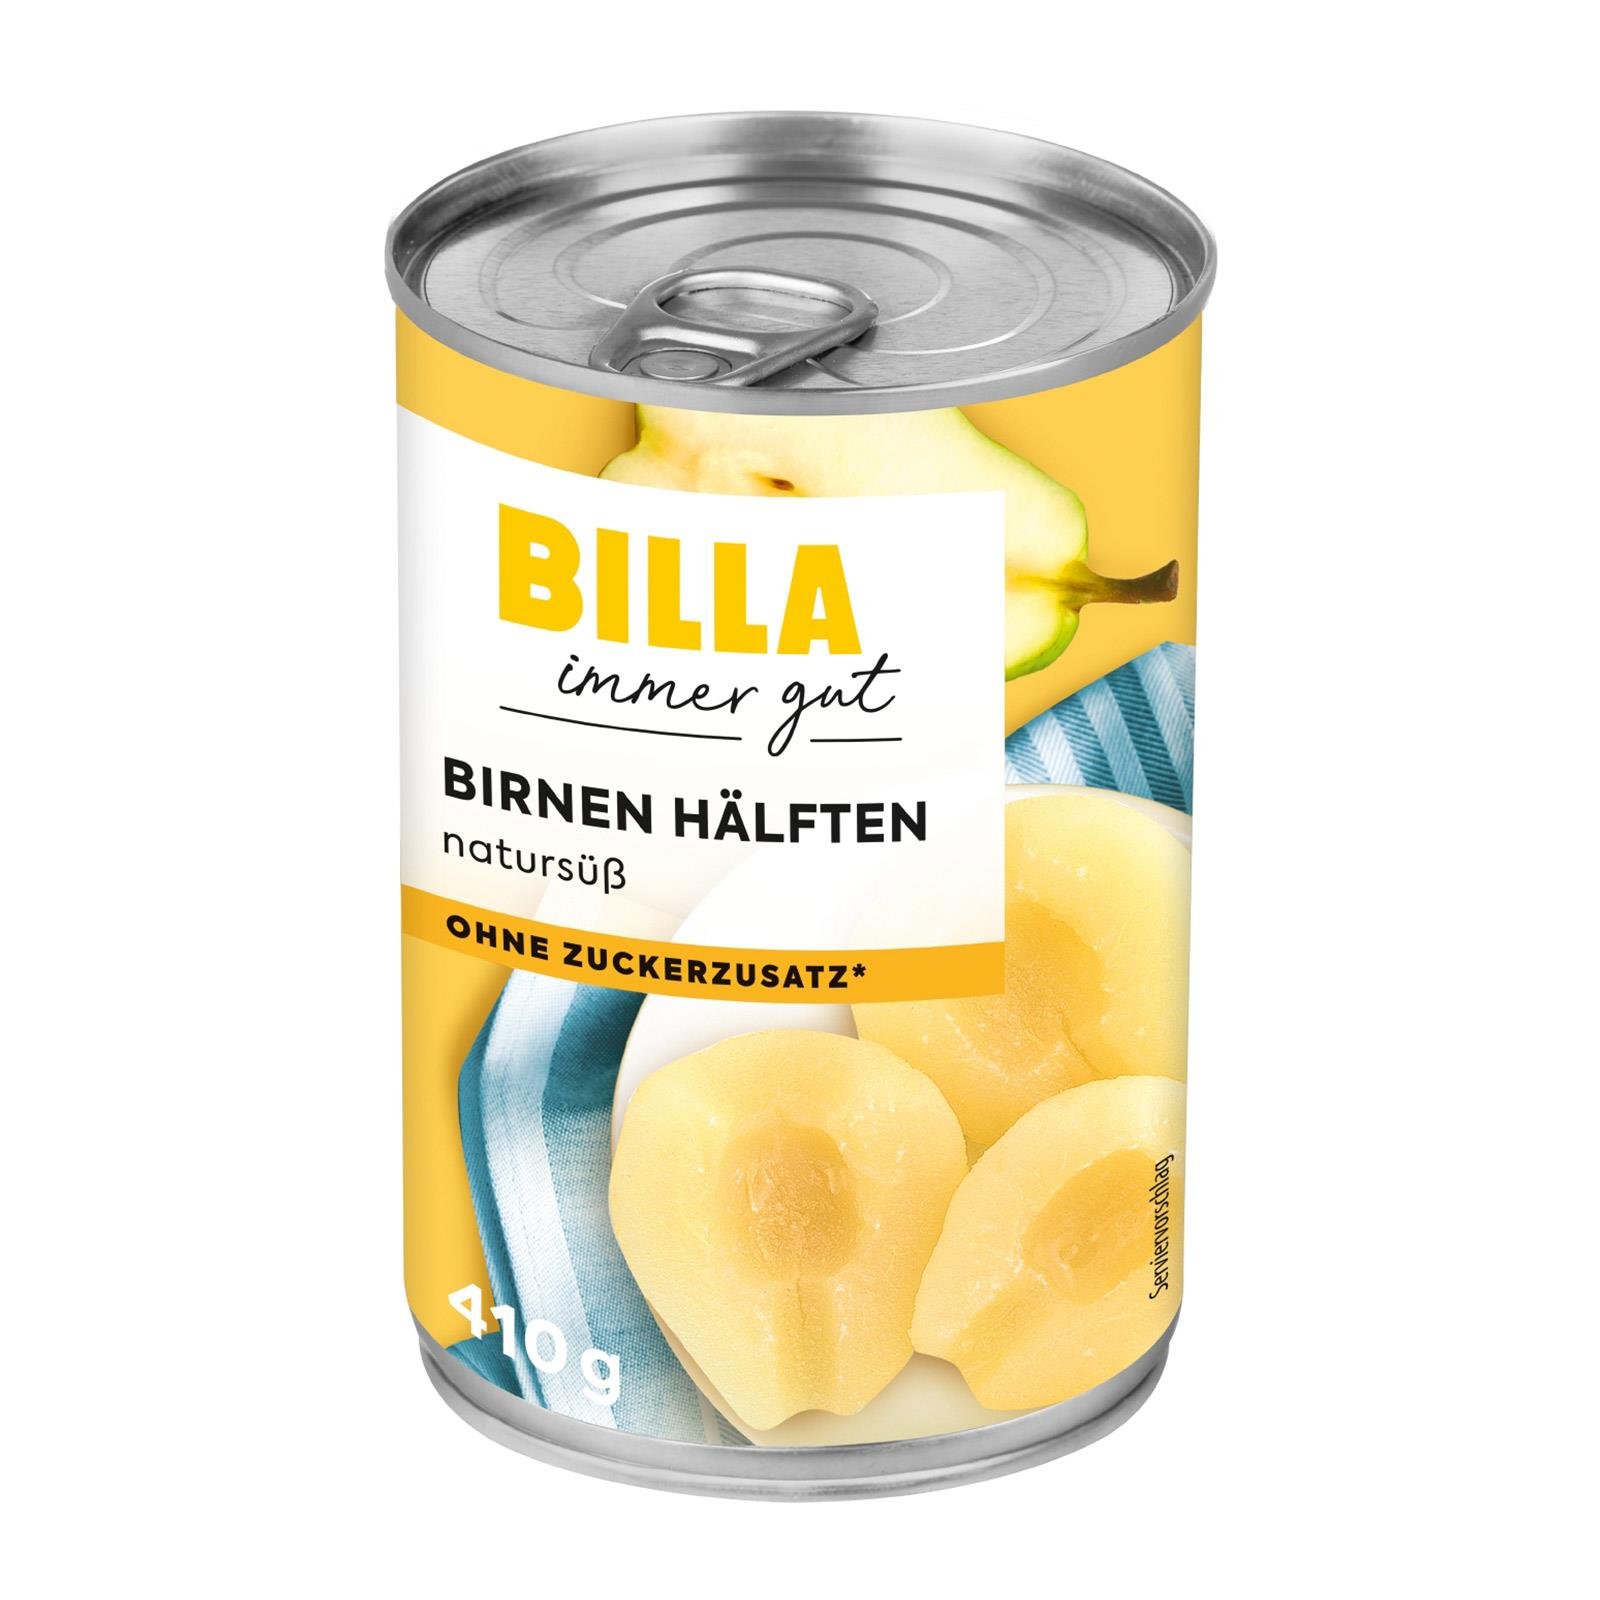 BILLA Birnen Hälften natursüß | BILLA Online Shop